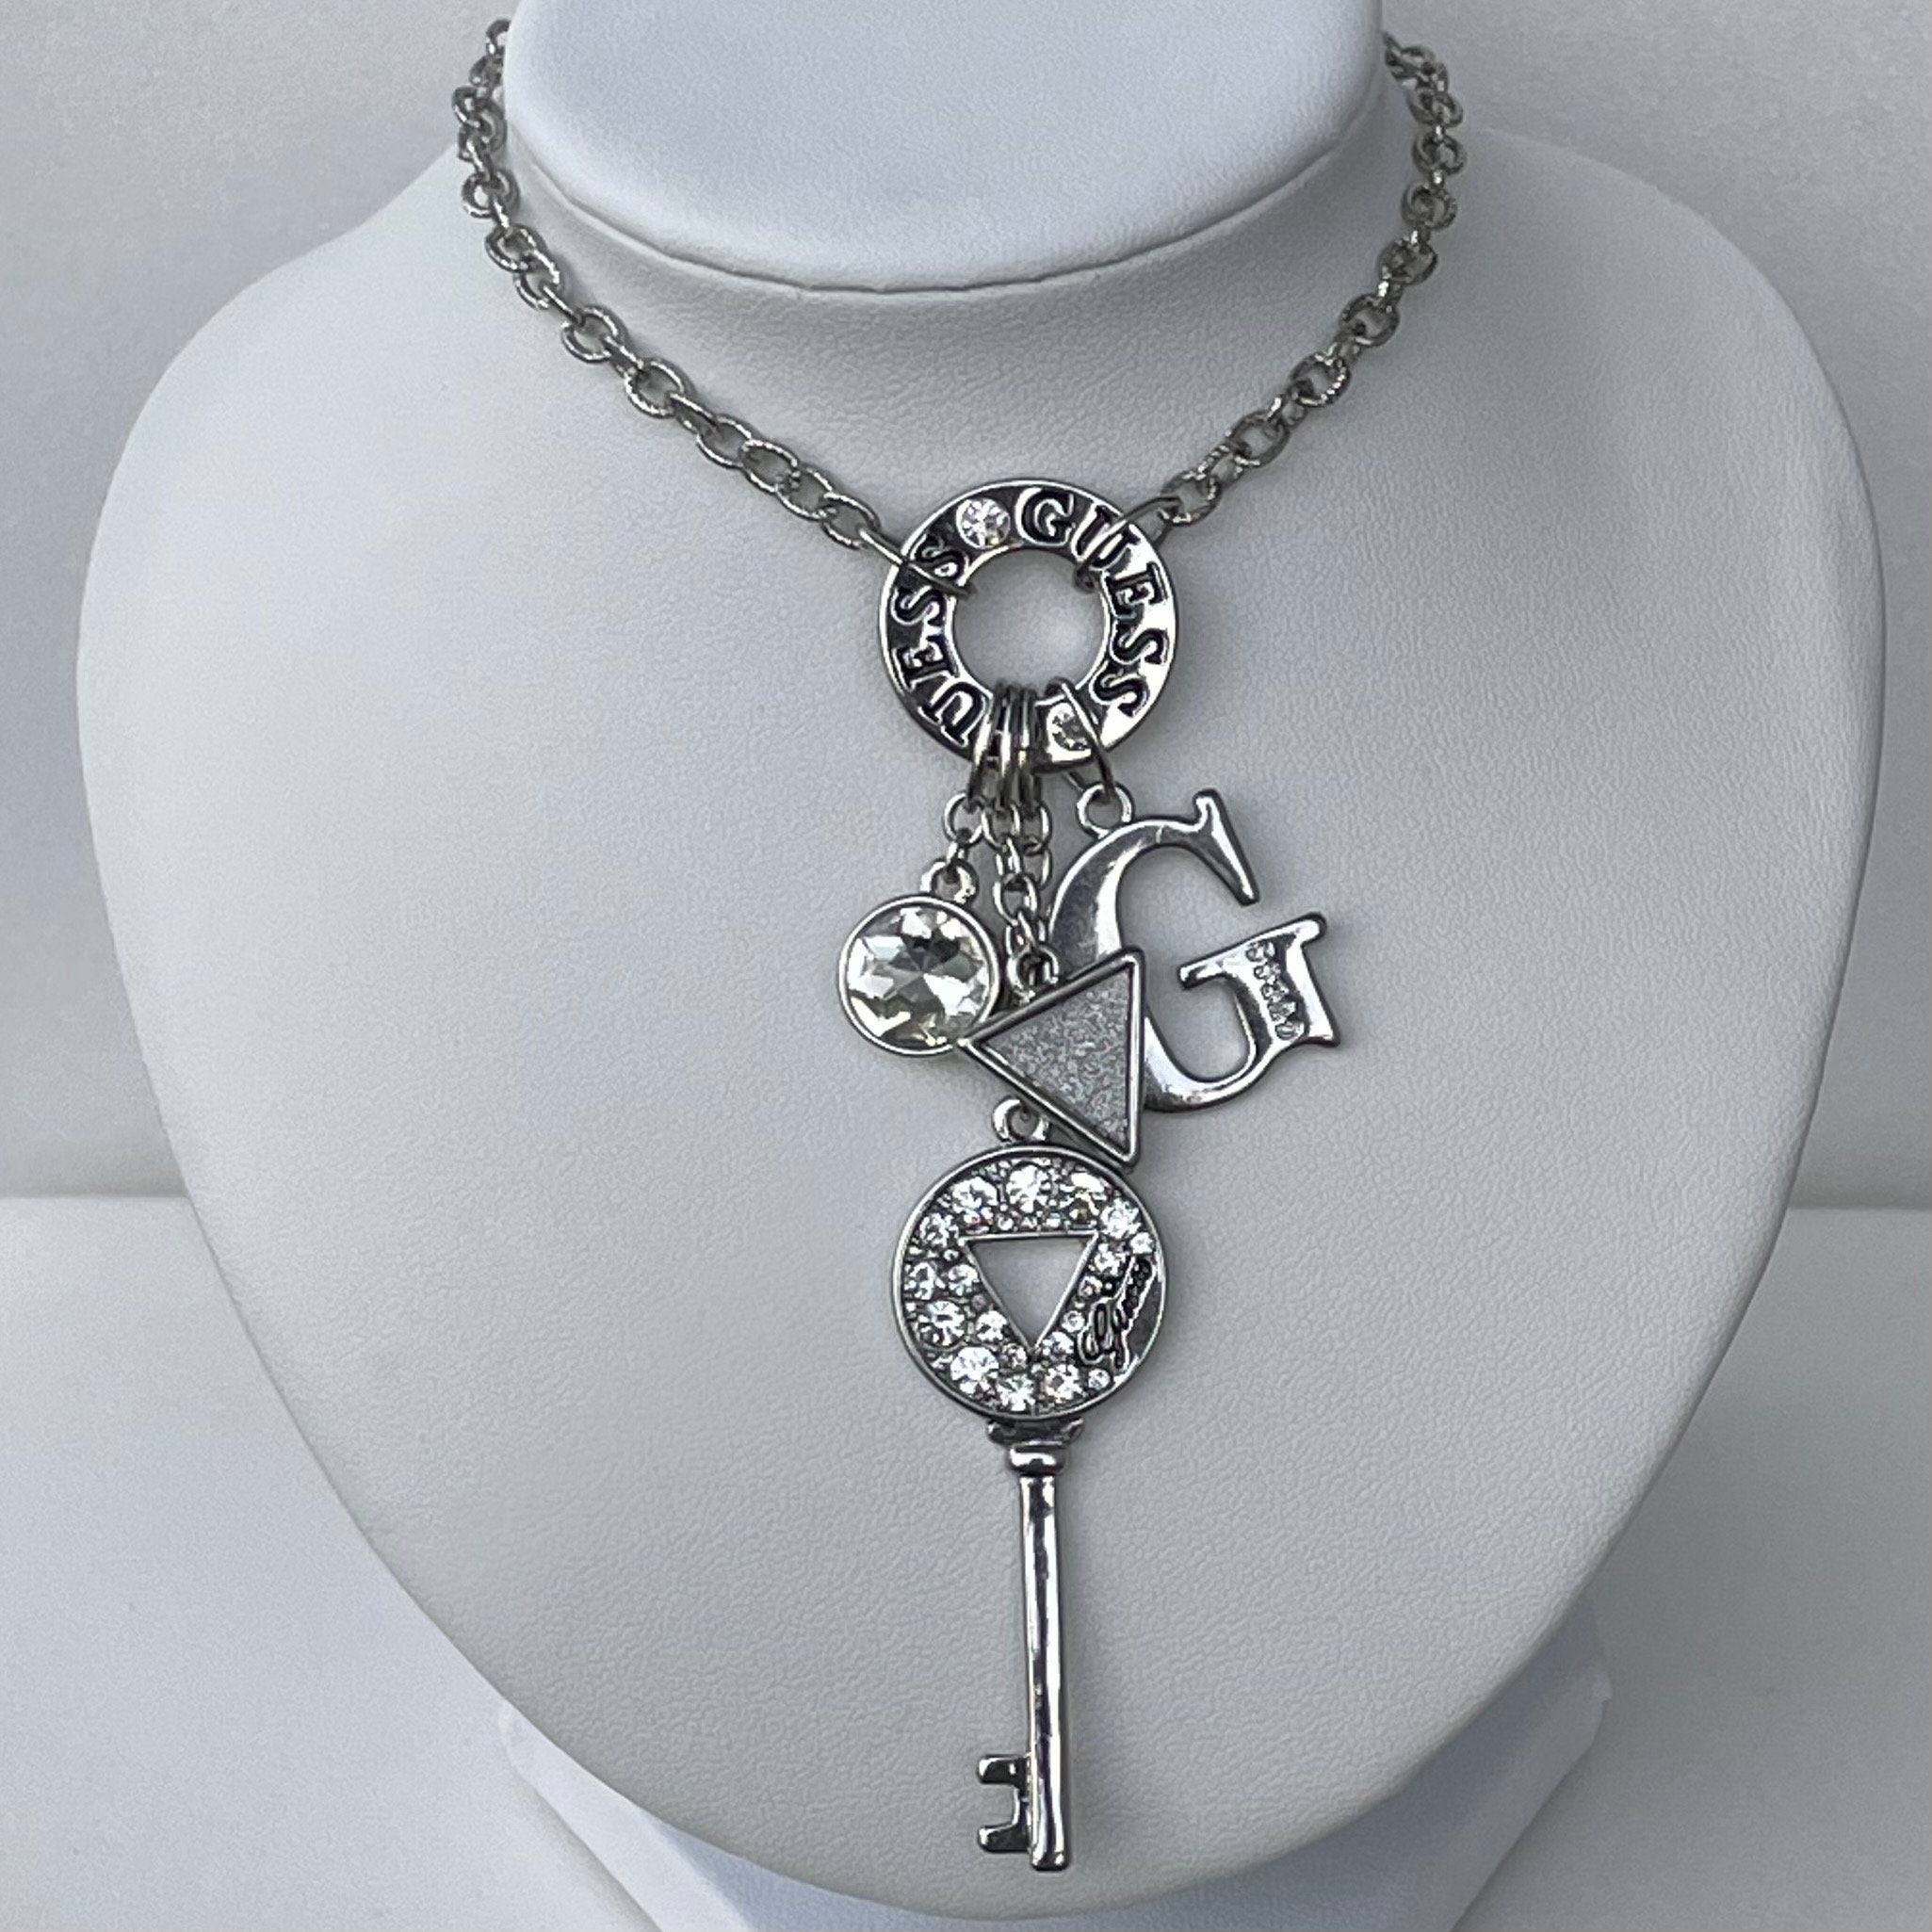 Vintage silvertone metal box chain 2 strap necklaces 26 inches